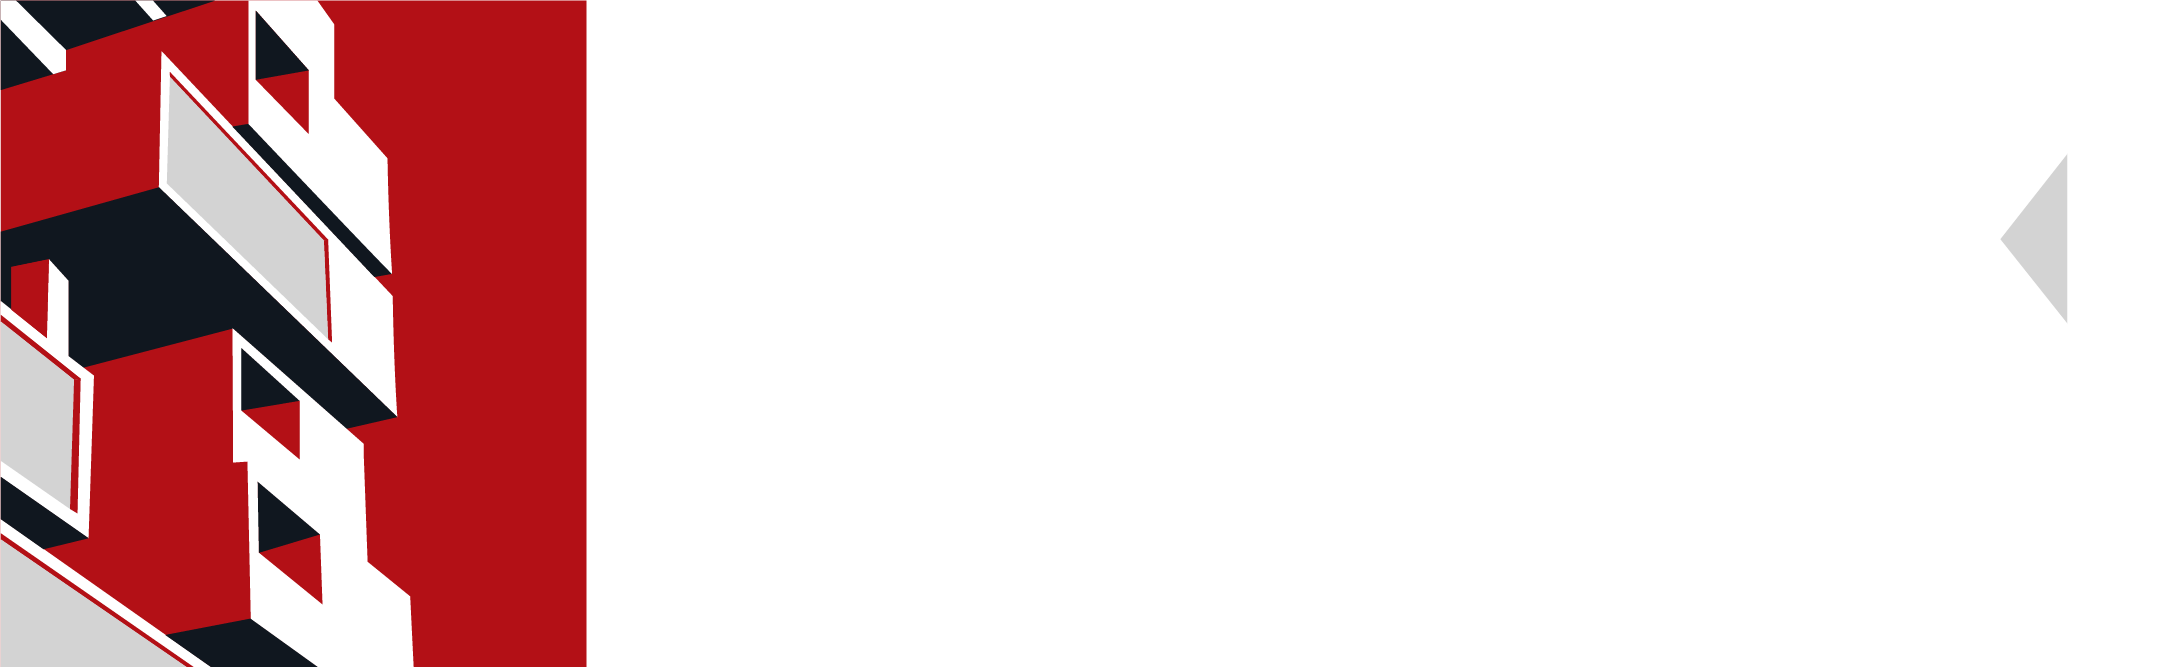 Geralex Syndic